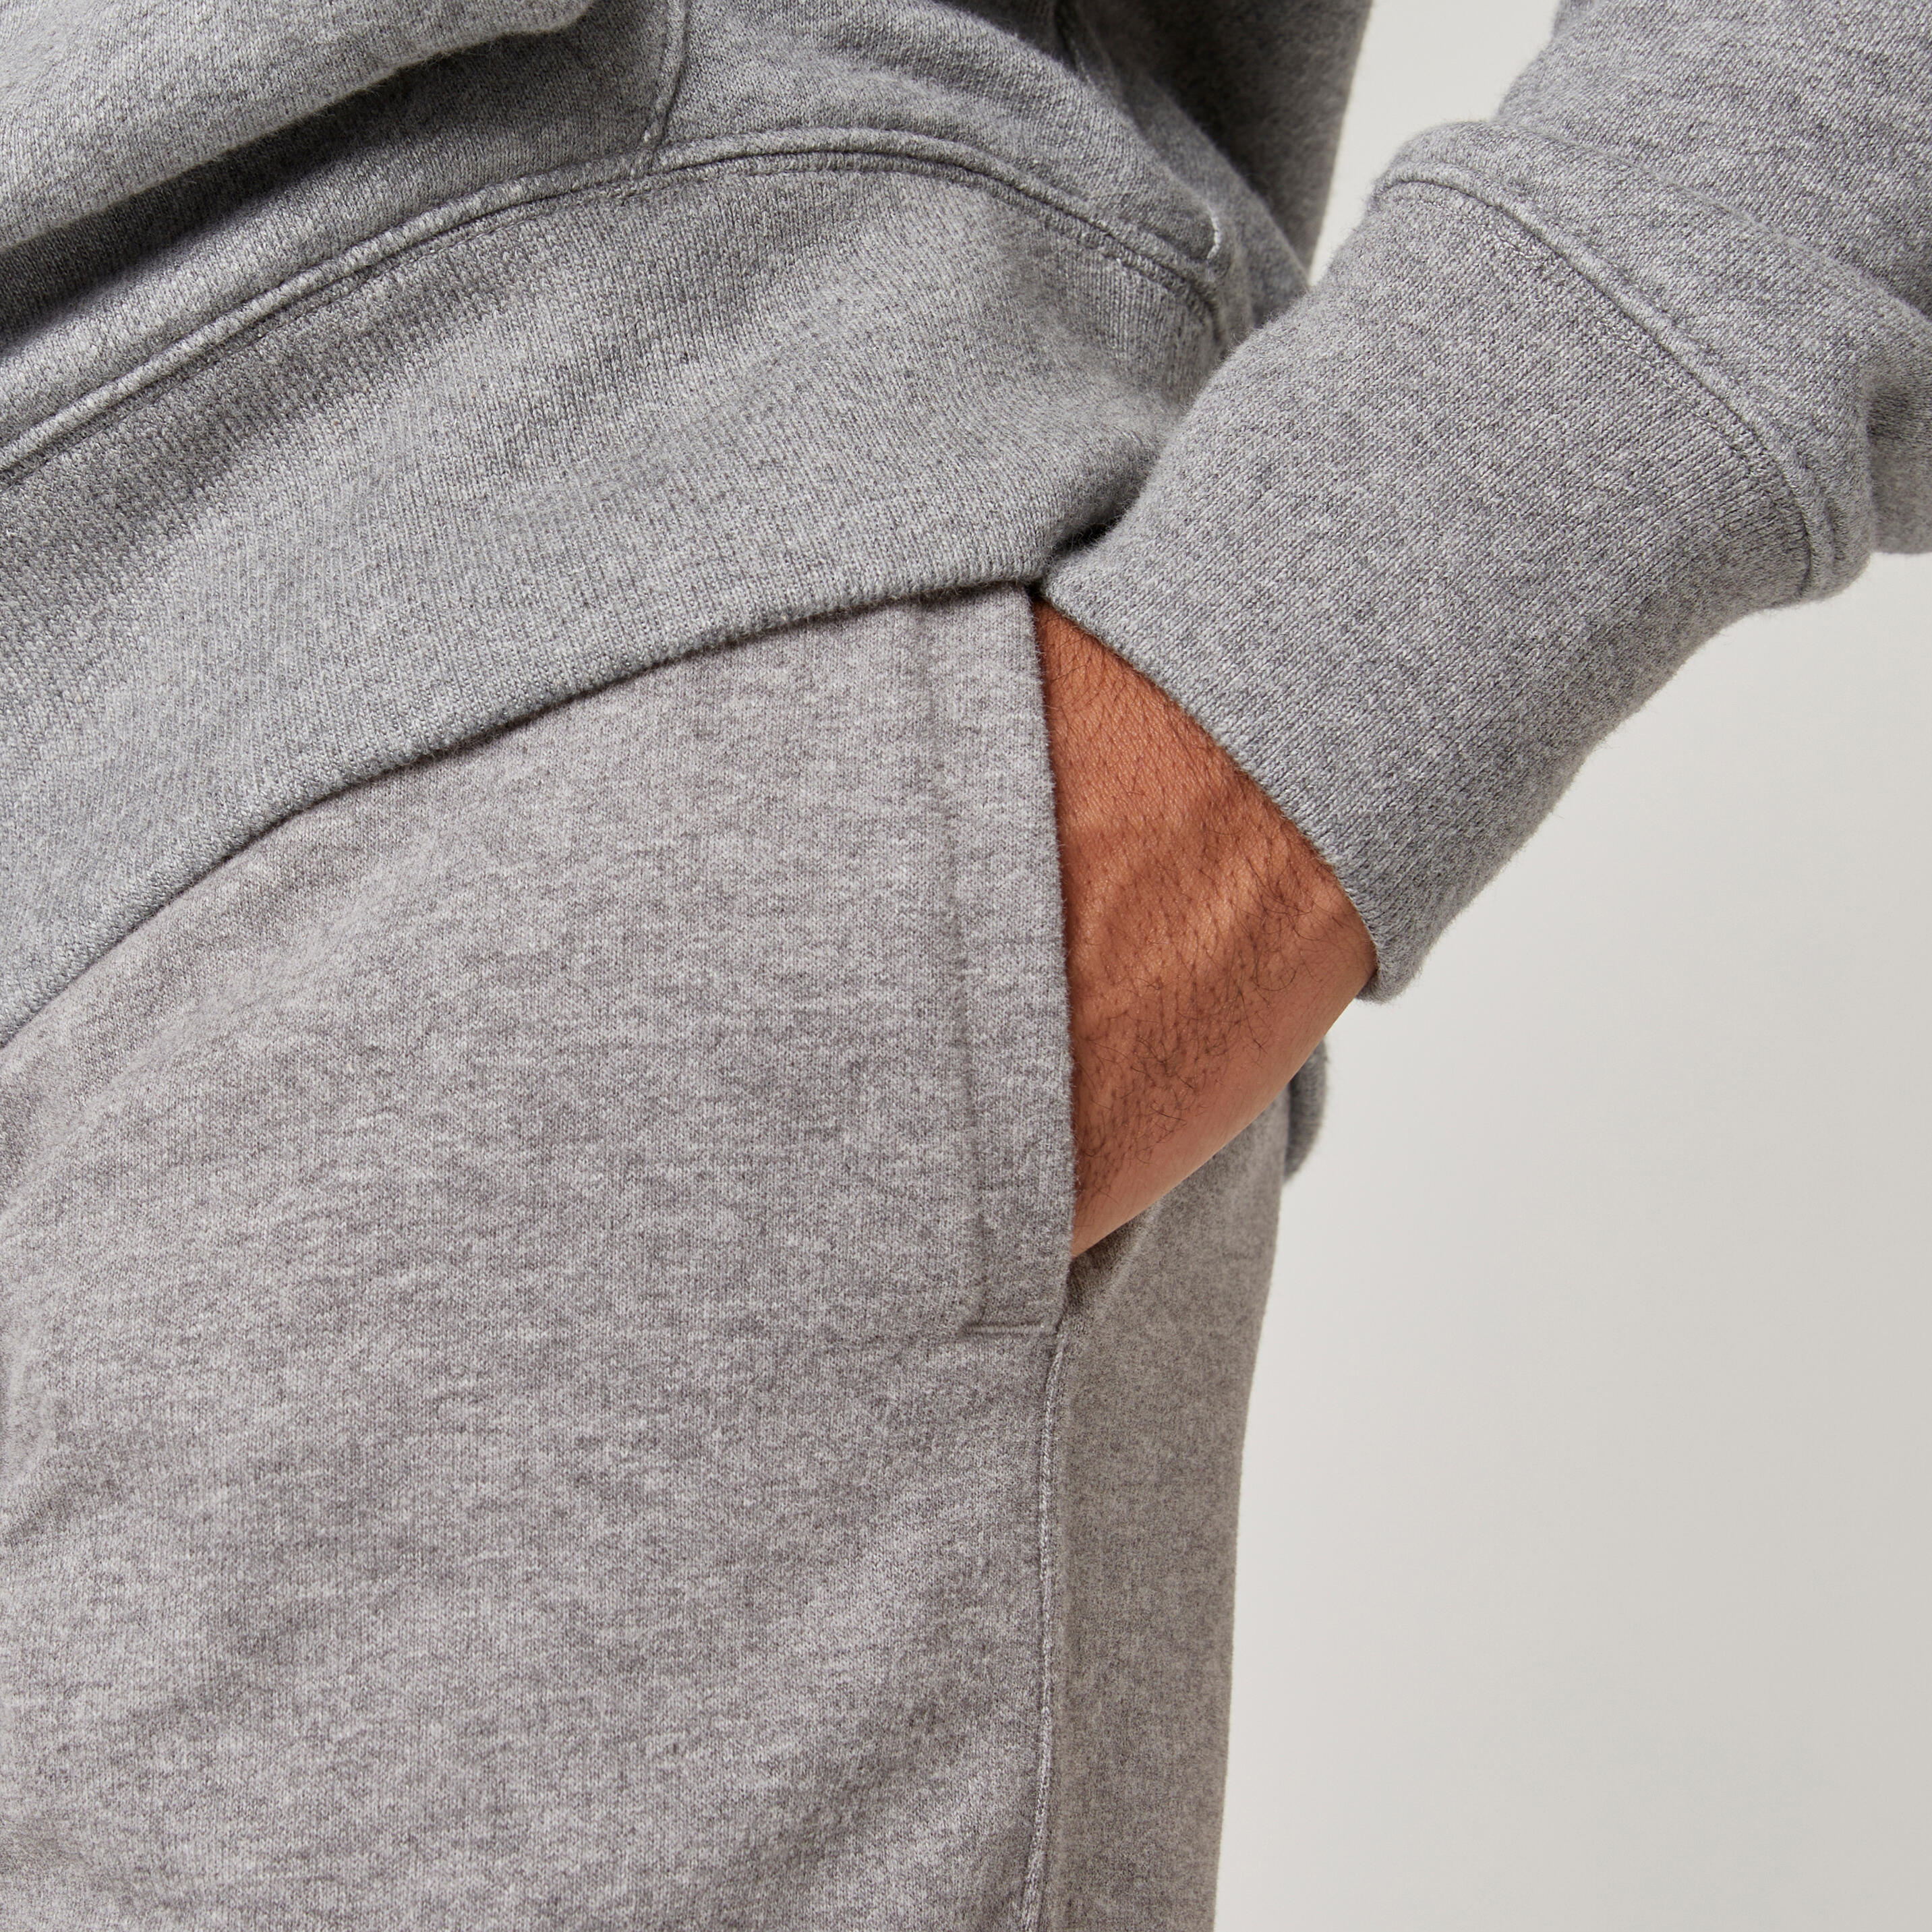 Men's comfortable slim-fit fitness jogging bottoms, grey 5/5